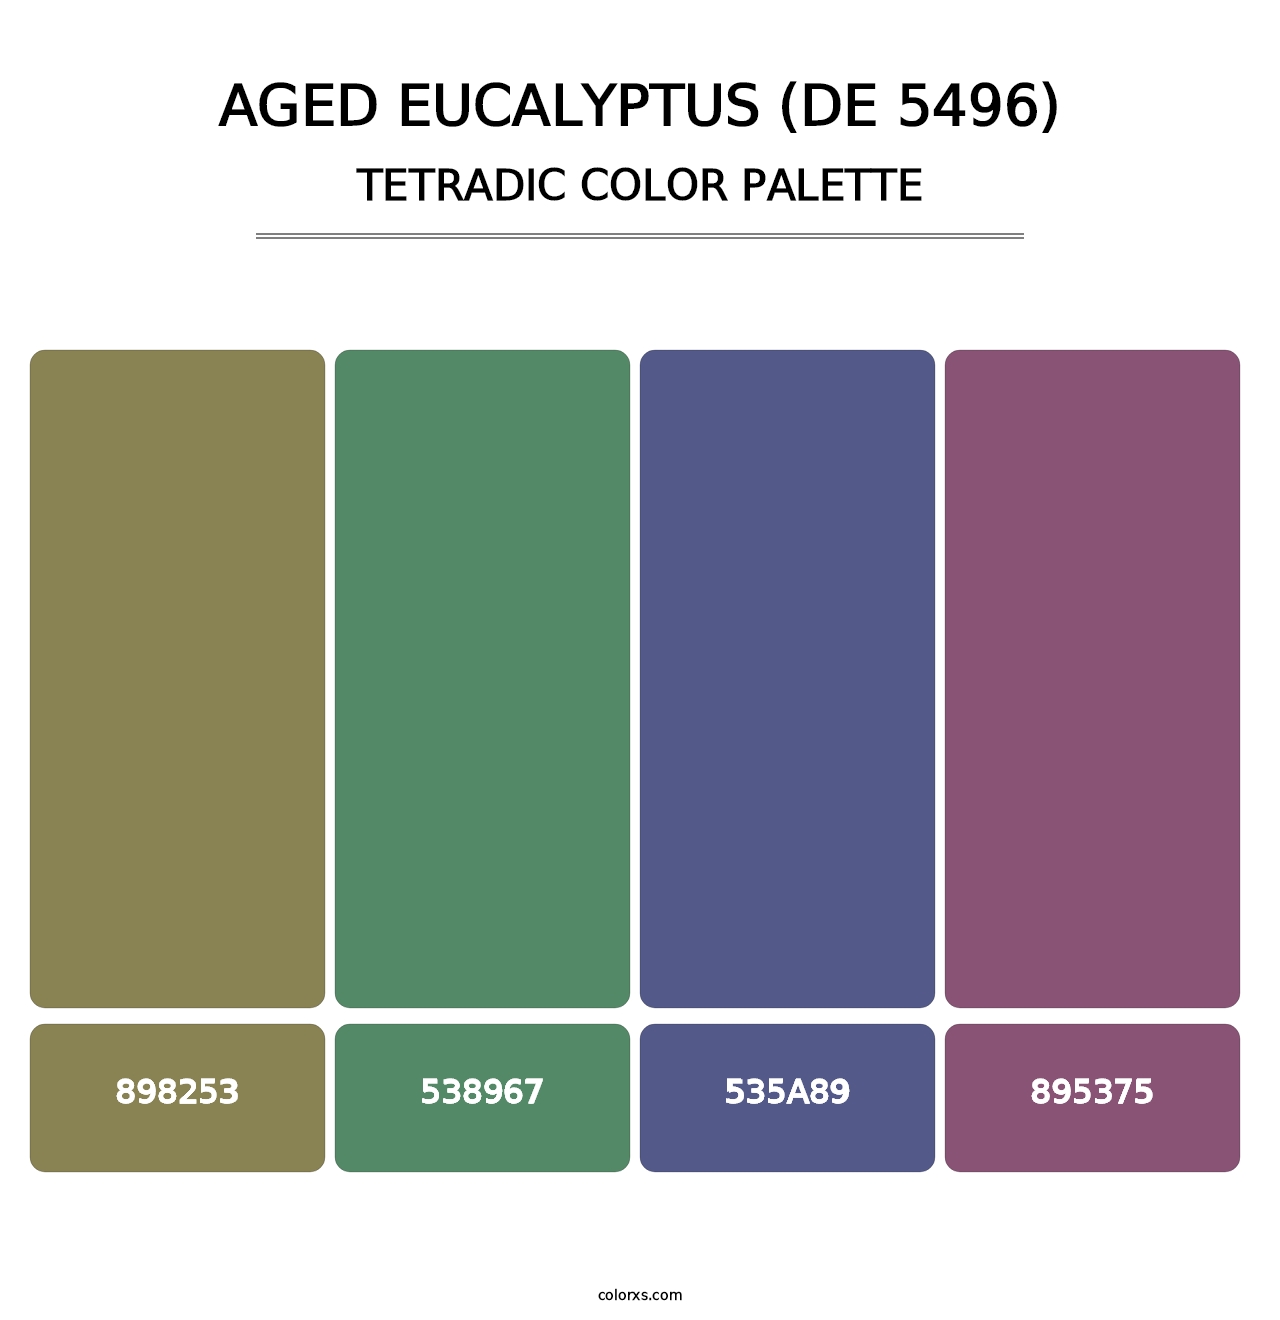 Aged Eucalyptus (DE 5496) - Tetradic Color Palette